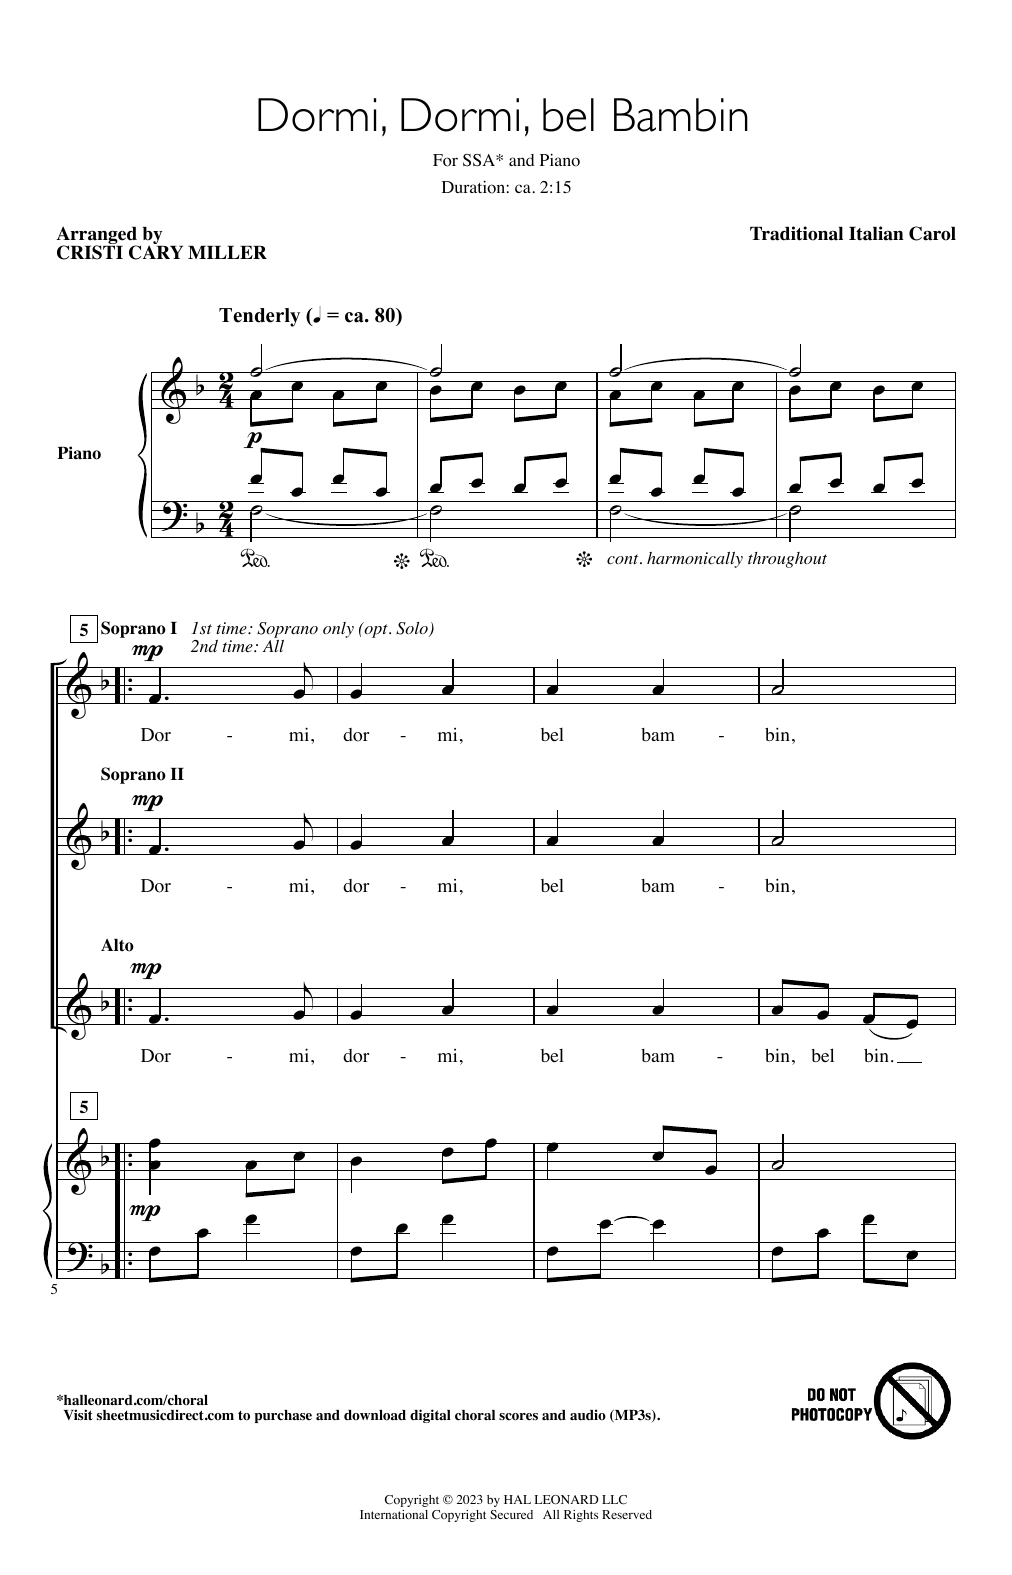 Traditional Italian Carol Dormi, Dormi Bel Bambin (arr. Cristi Cary Miller) sheet music notes and chords arranged for SSA Choir